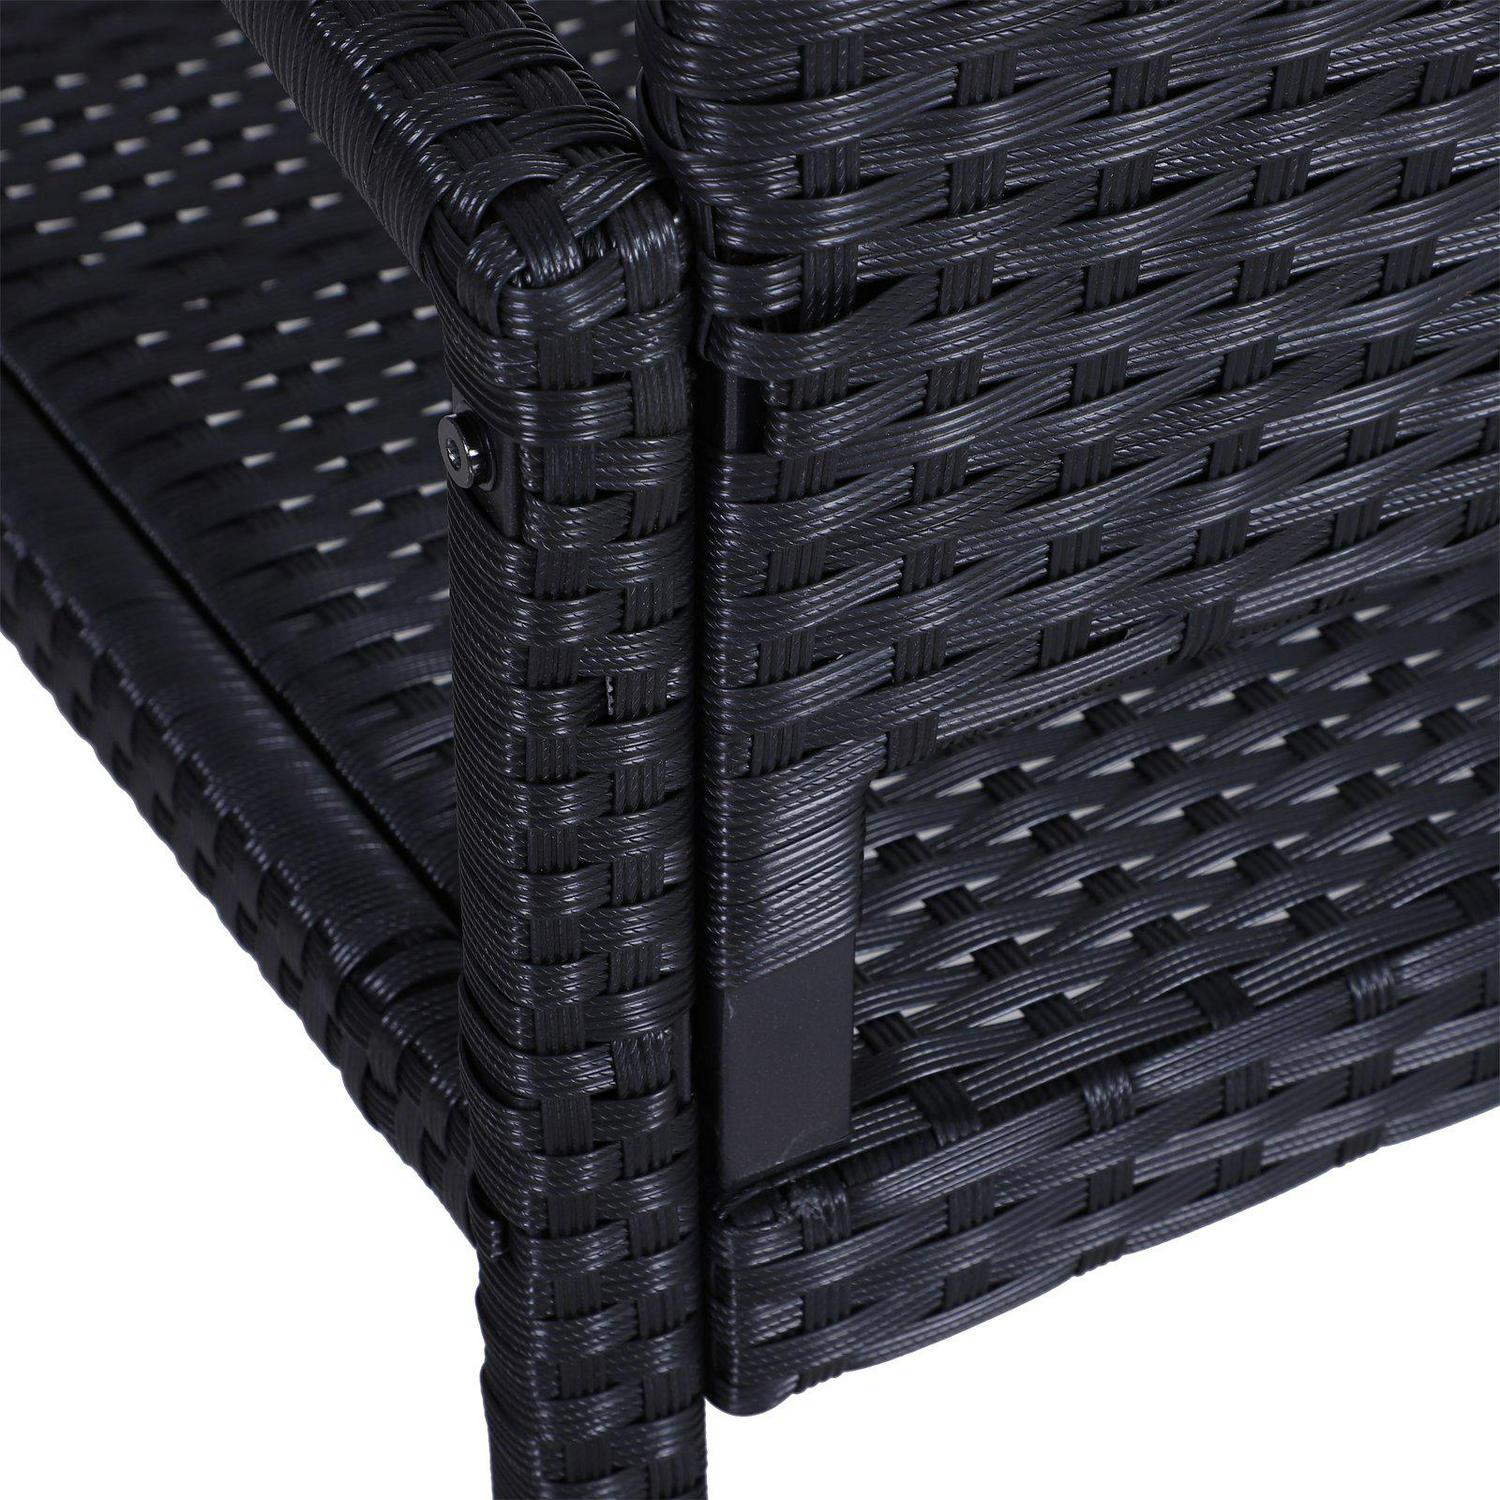 Rattan Chair 2-Seater Loveseat-Black